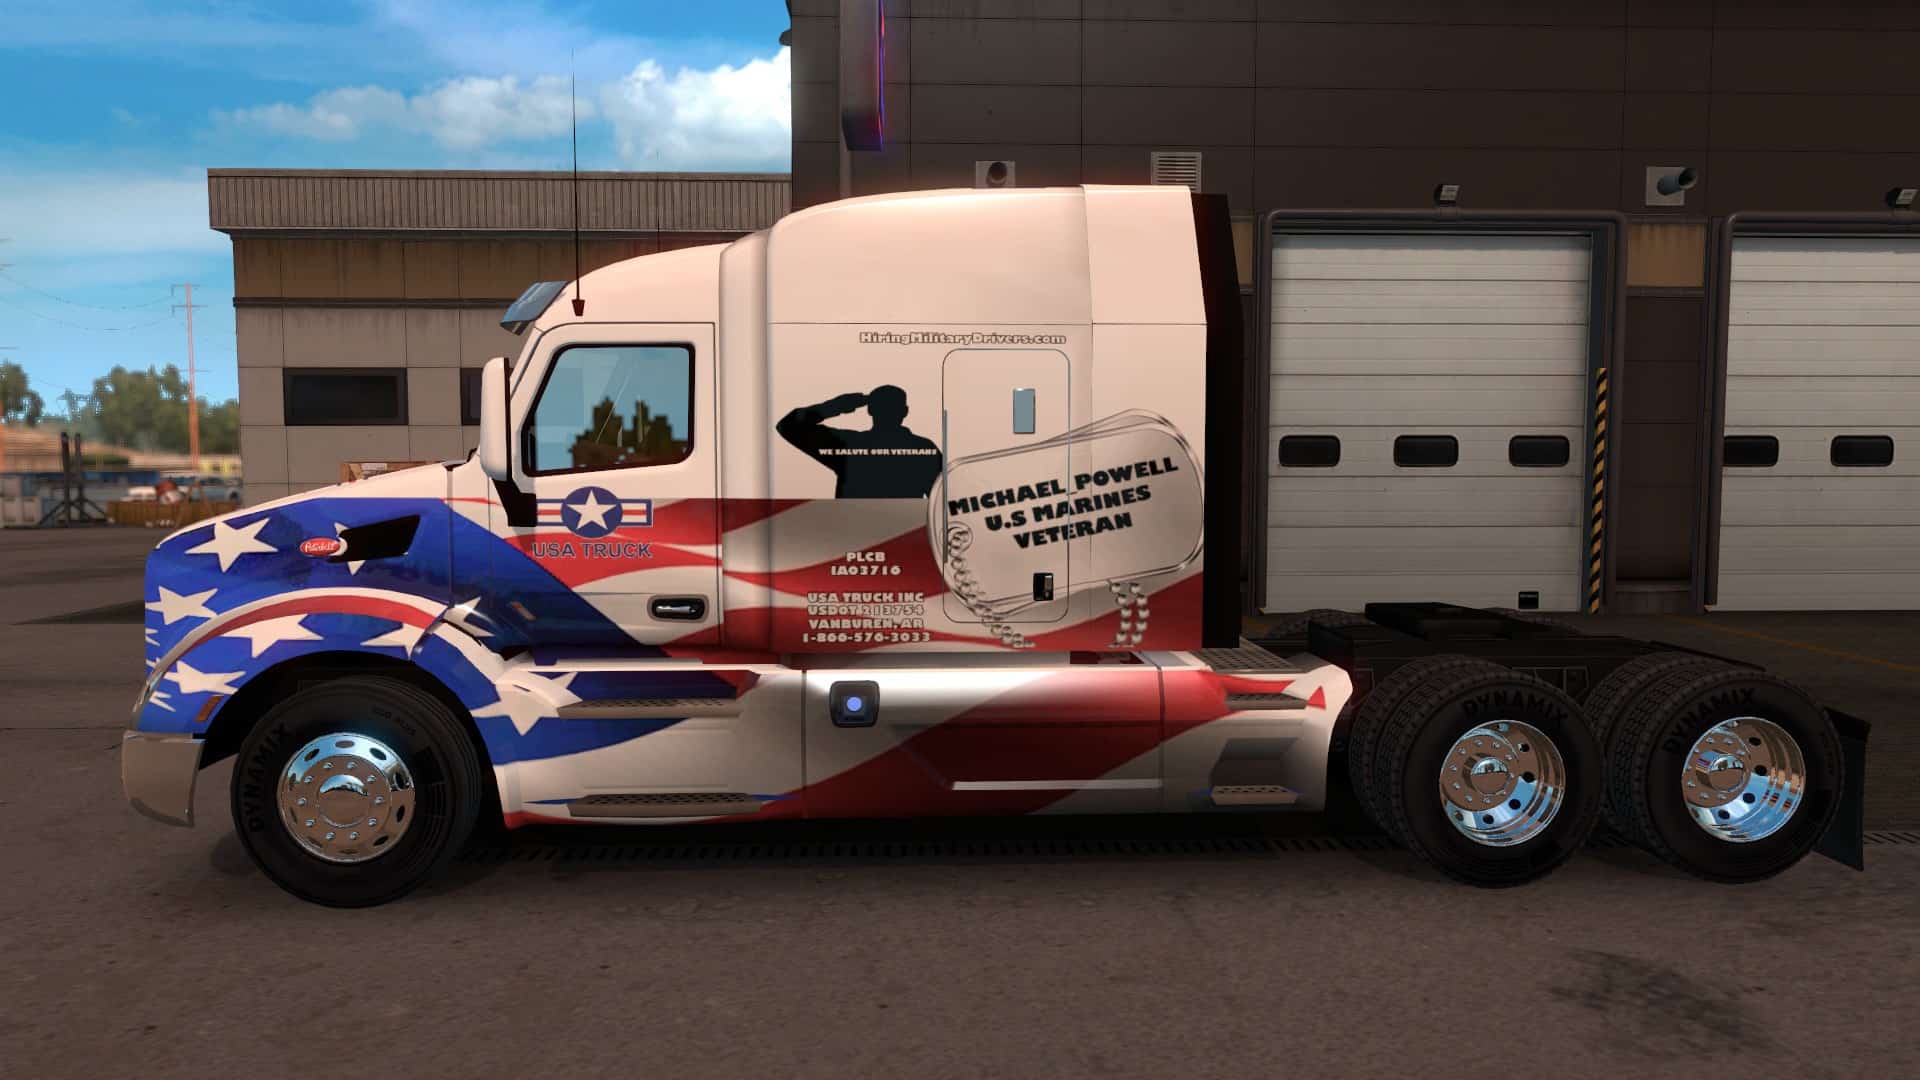 USA Trucks Vets Salute Michael Powell  American Truck Simulator mod  ATS mod